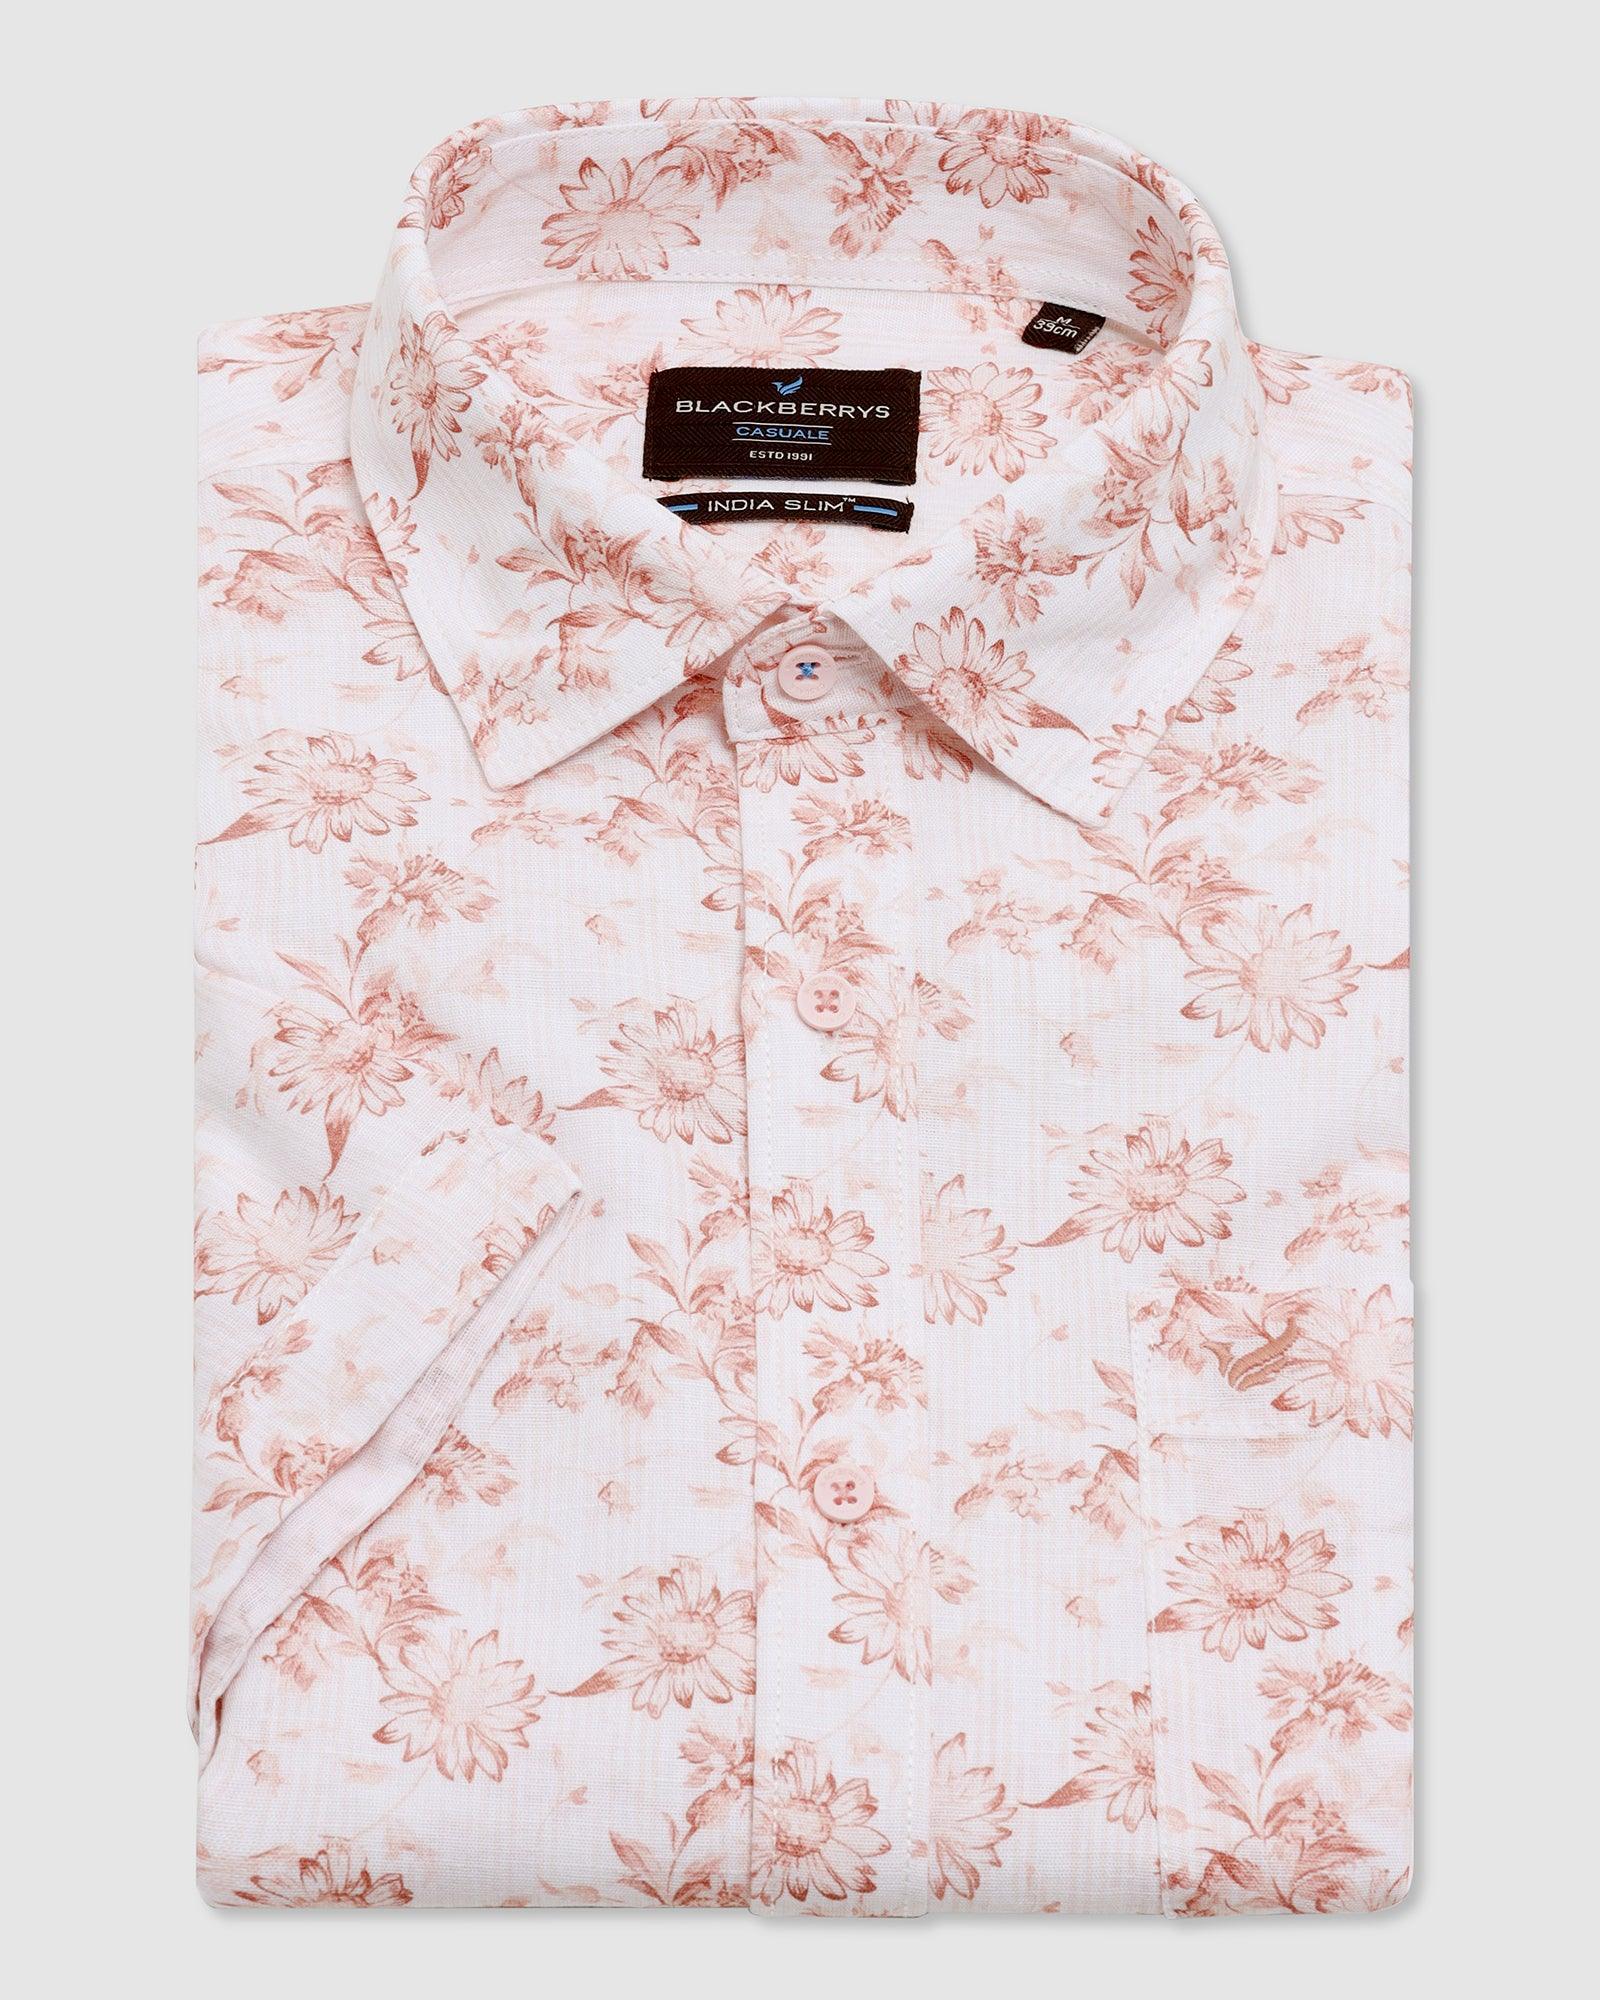 Linen Formal Half Sleeve Peach Printed Shirt - Fuji